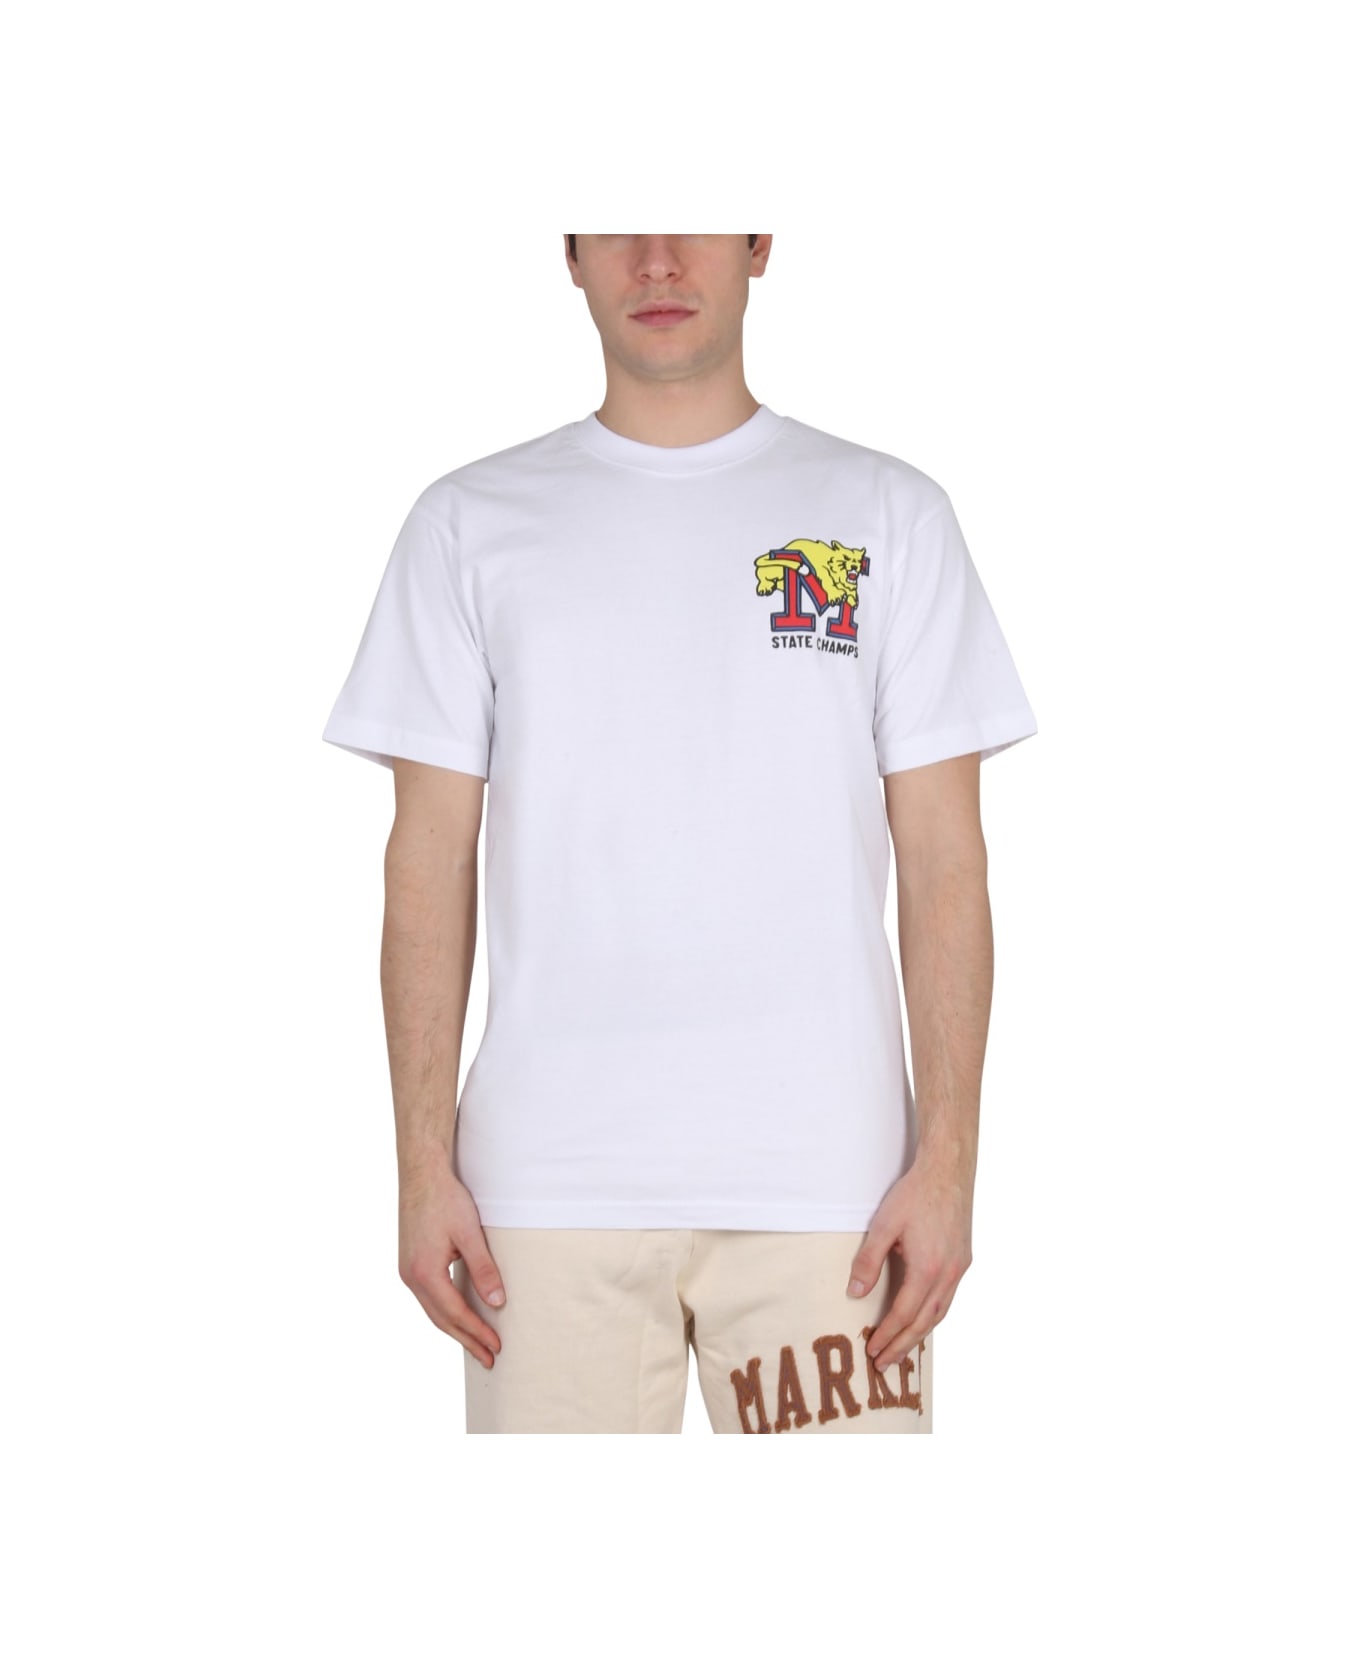 Market T-shirt State Champs - WHITE Tシャツ